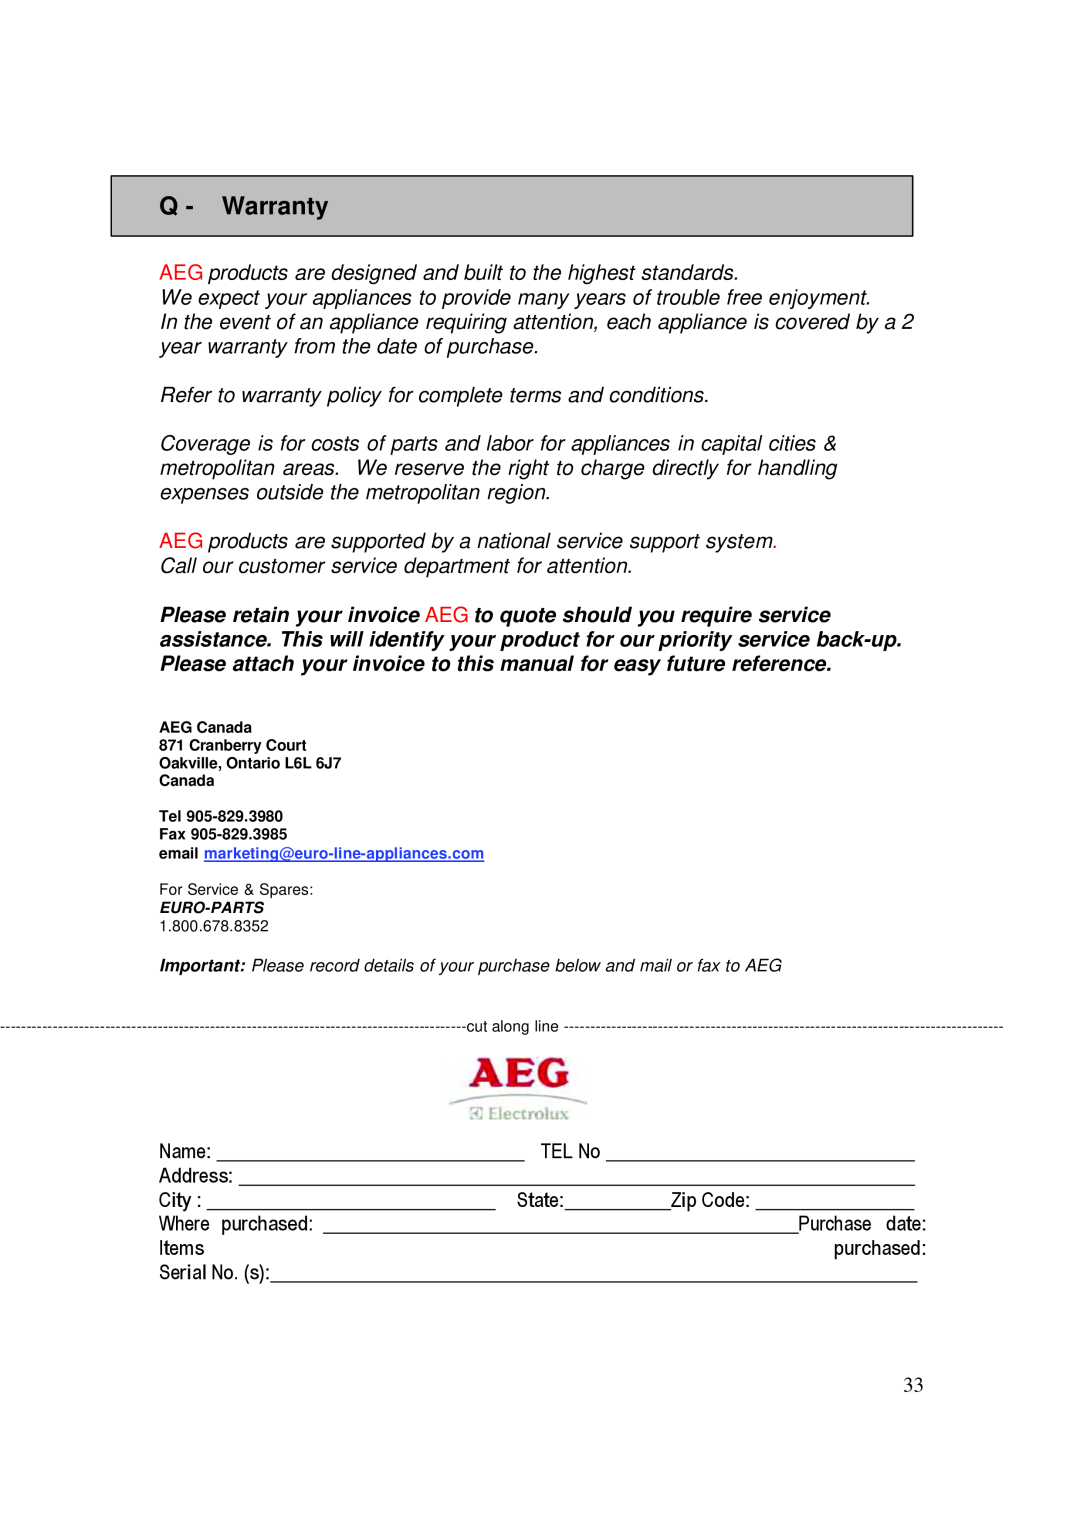 AEG HK995070FB user manual Address, City, State, Items, purchased, Q - Warranty 